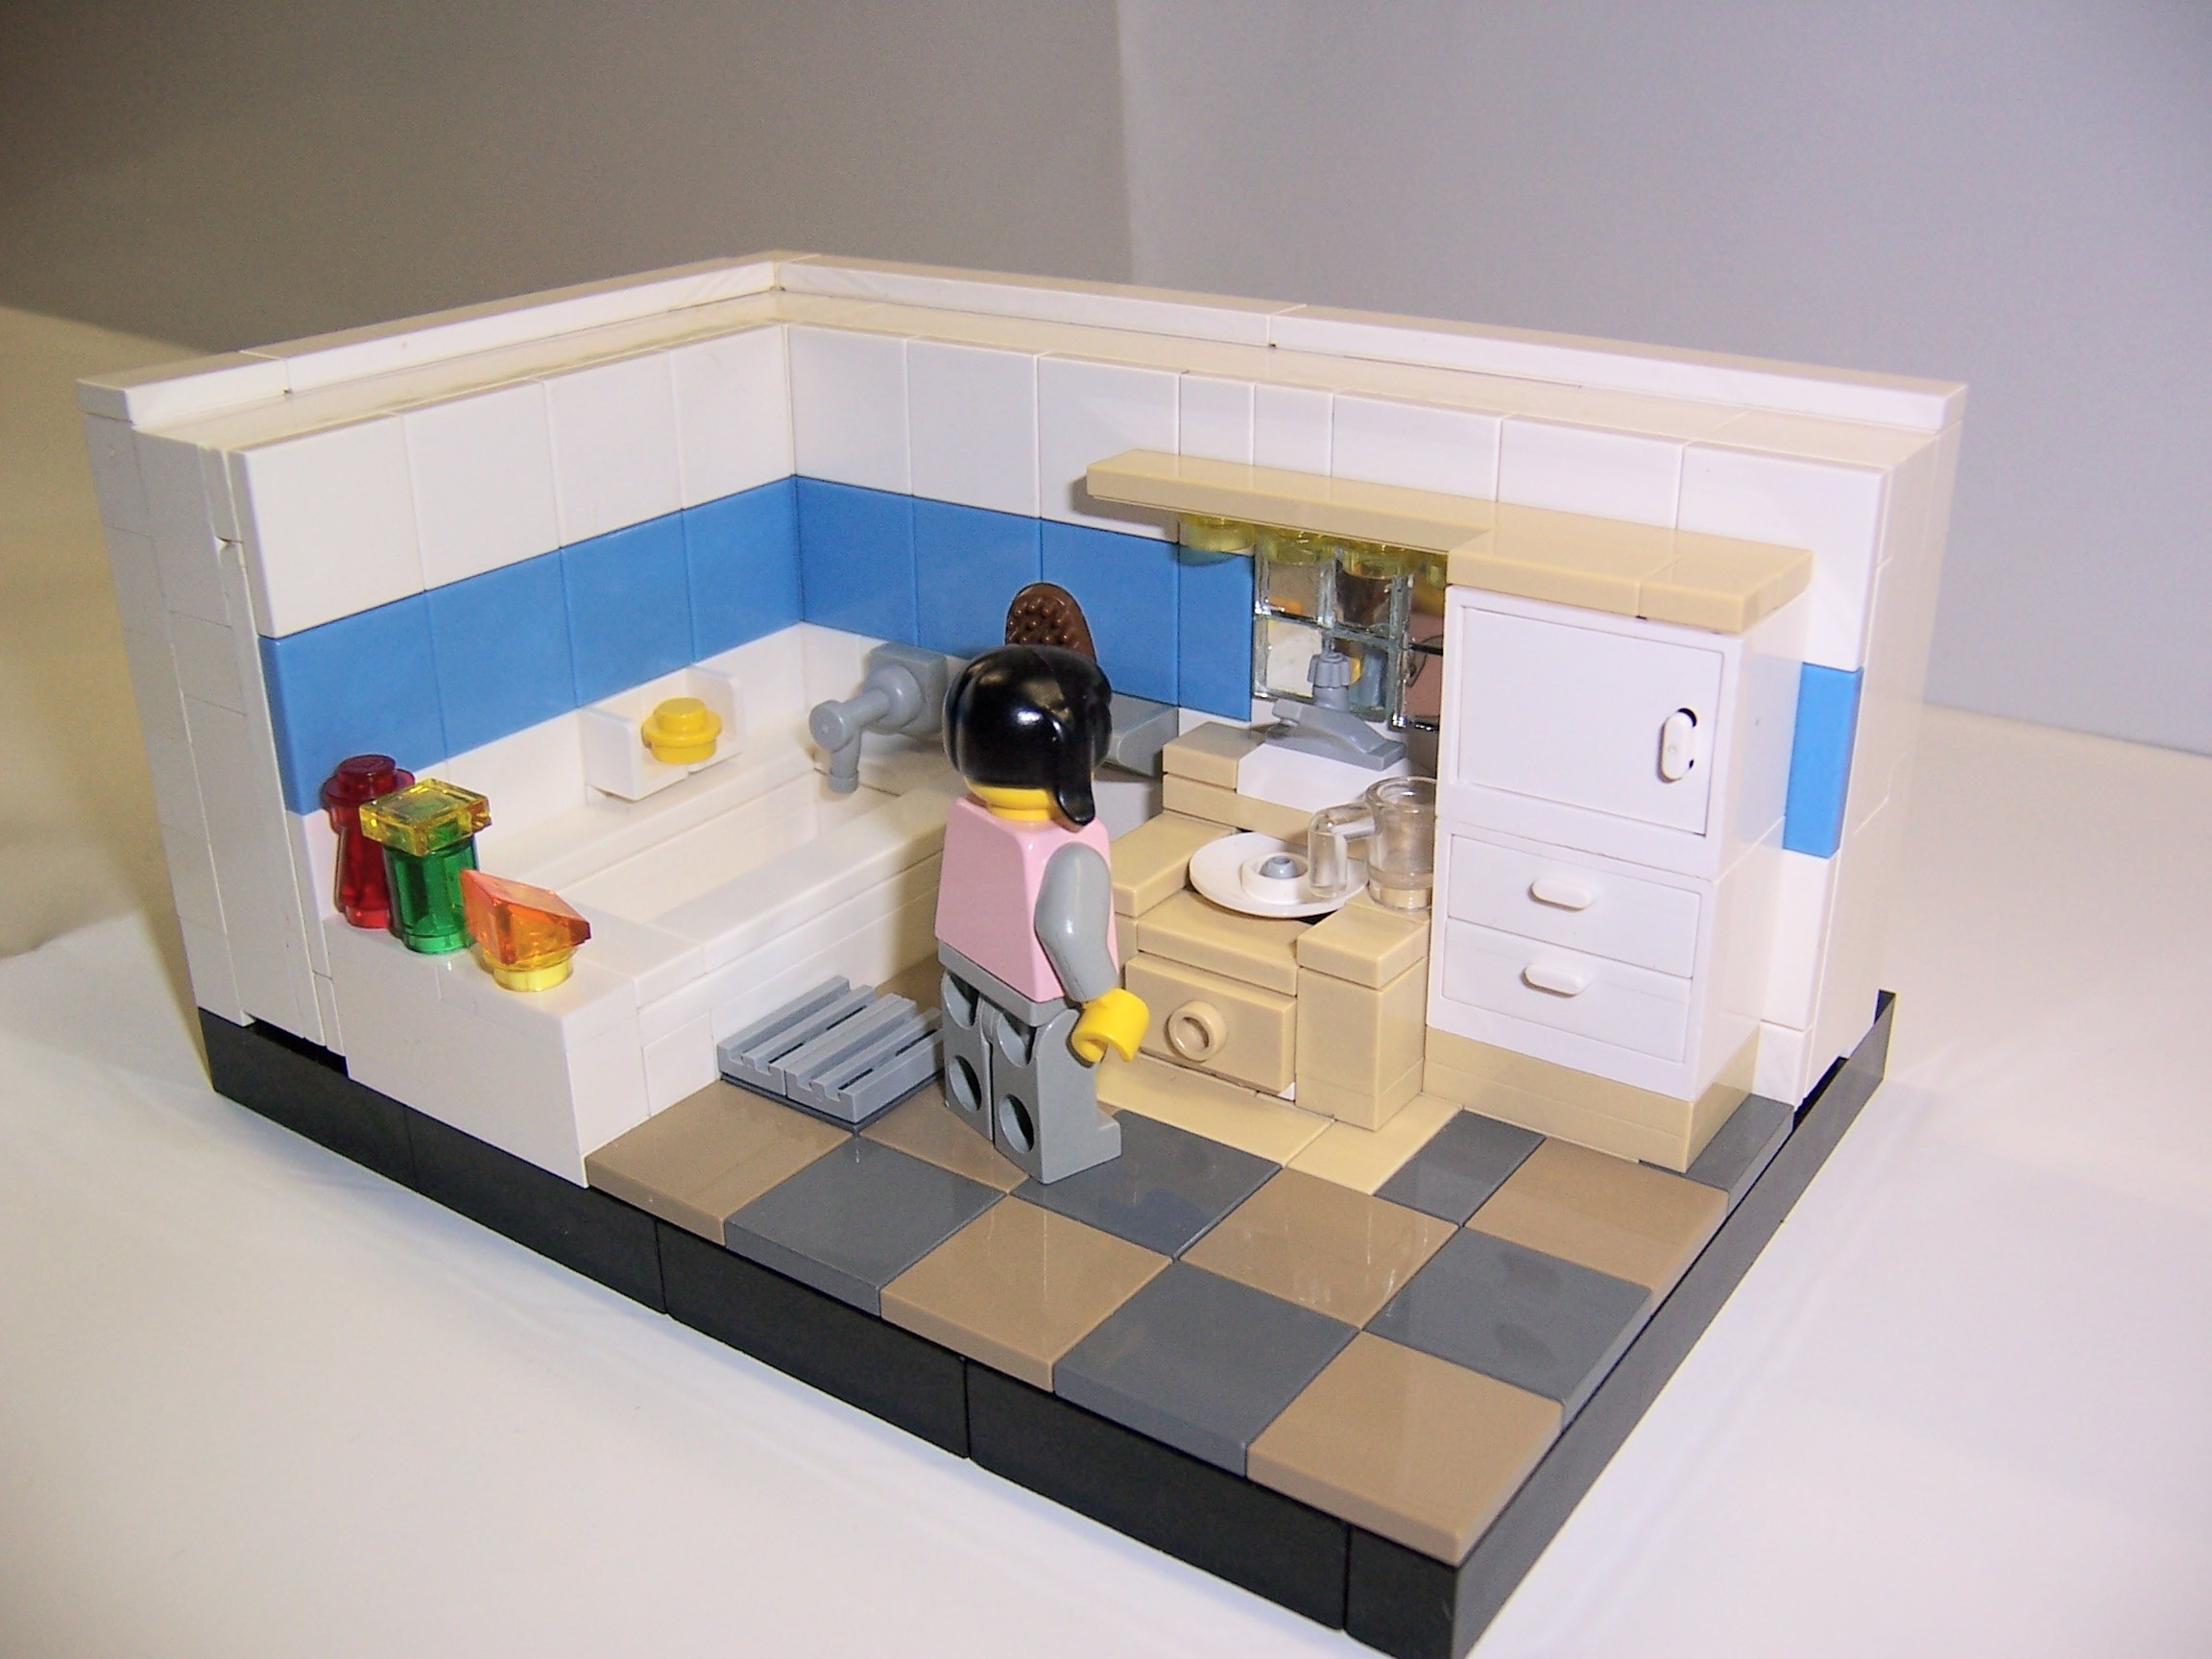 LEGO bathhouse